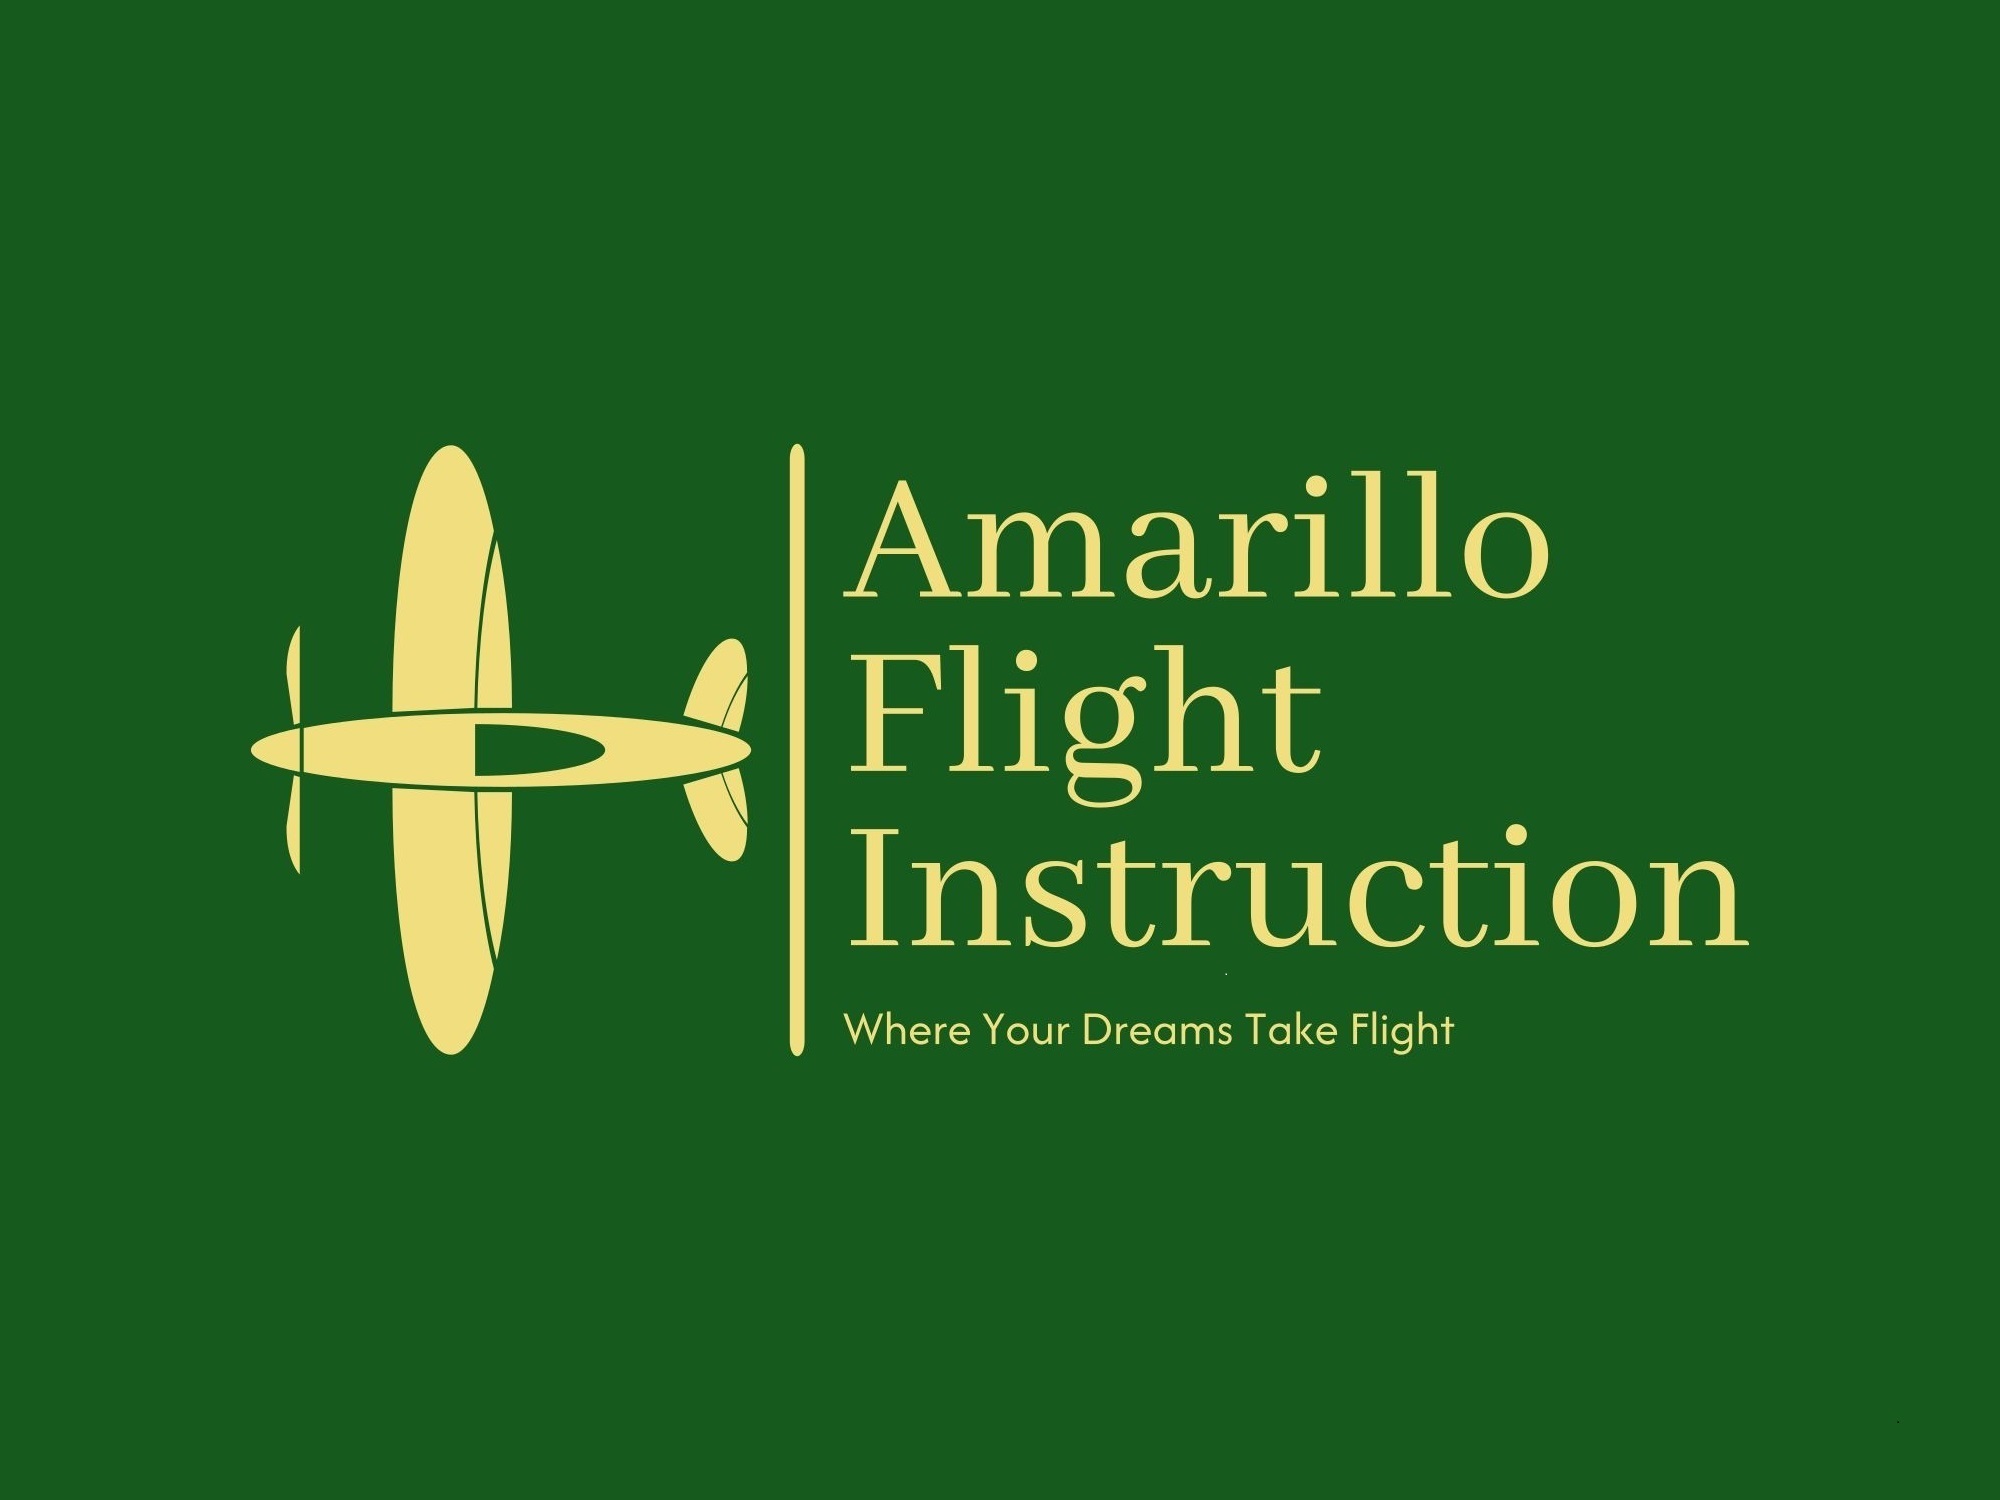 Amarillo Flight Instruction